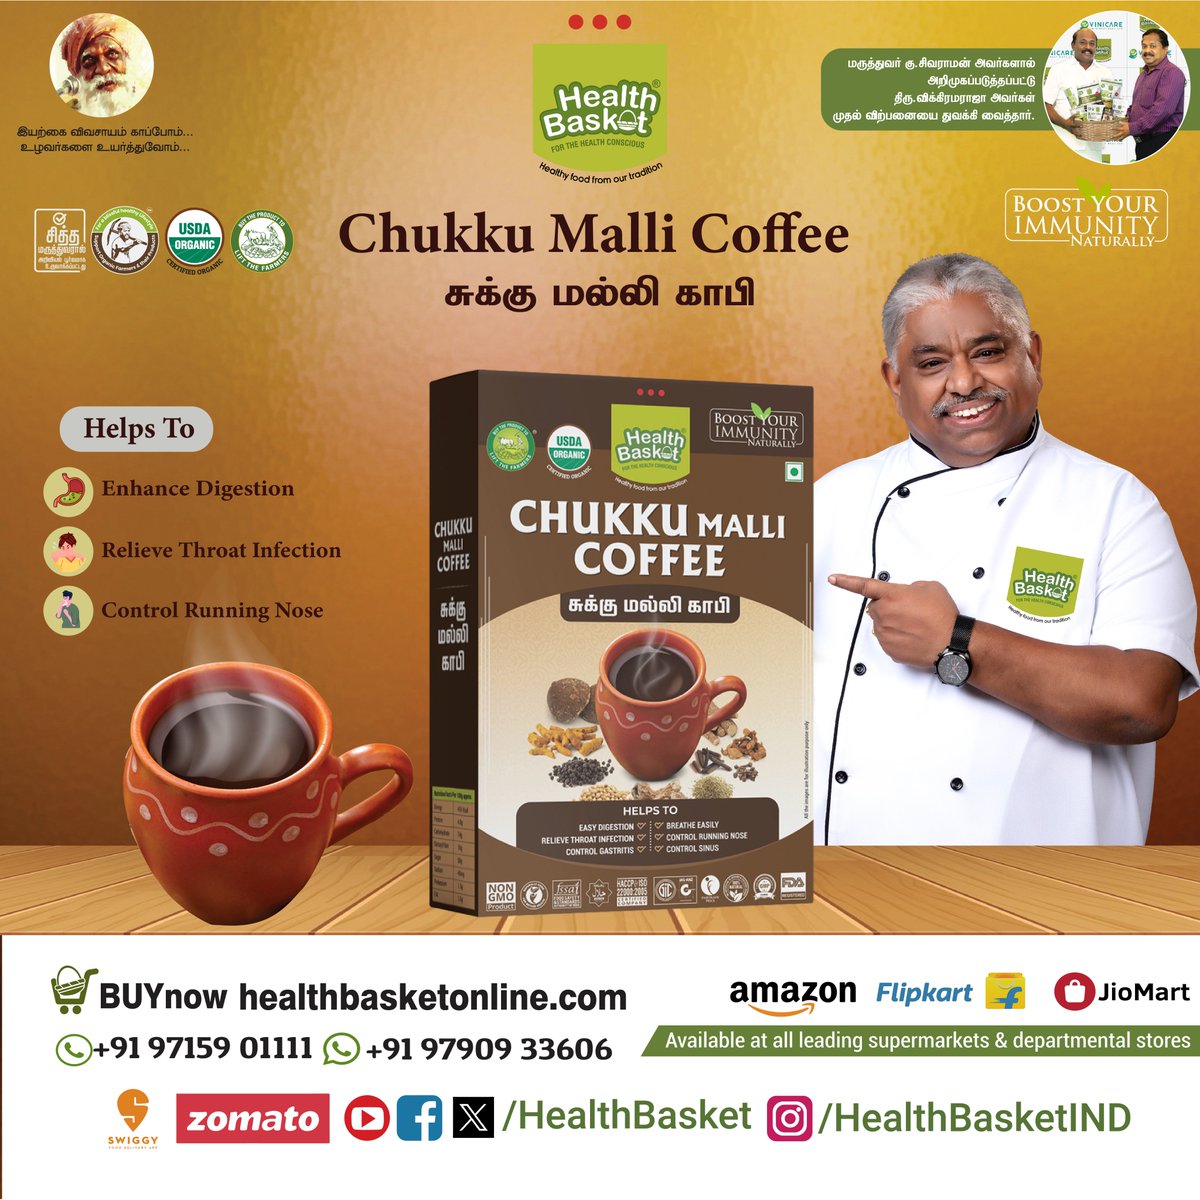 Health Basket  Multi Millet Chukku Malli Coffee

For Orders Contact: +91 97159 01111 or WhatsApp +91
97909 33606
Visit healthbasketonline.com for more Details.
#chukkumallicoffee #karupatticoffee #HealthyDrink #healthbasket